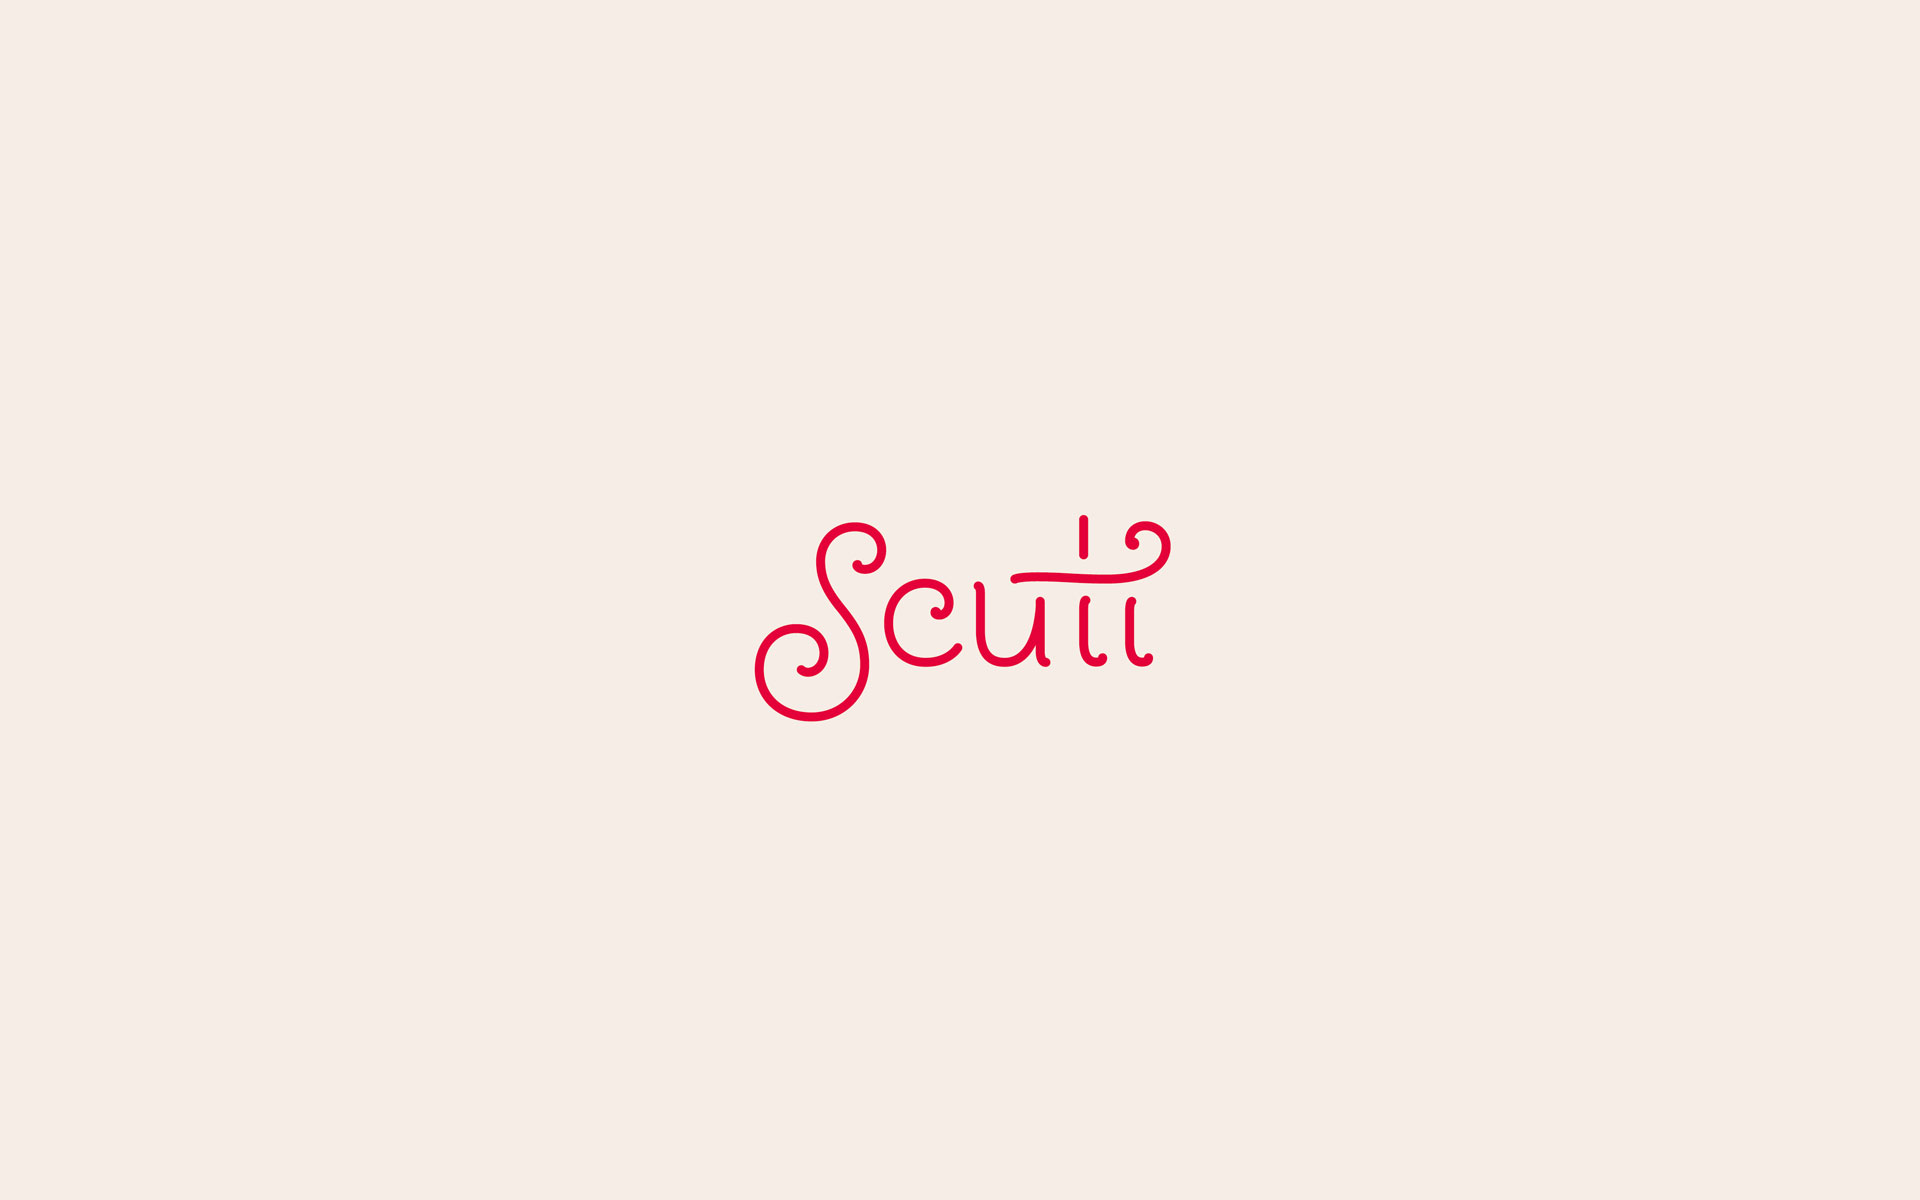 Scuti - Gourmet Desserts & Chocolates - Identity Design - Logotype light bg